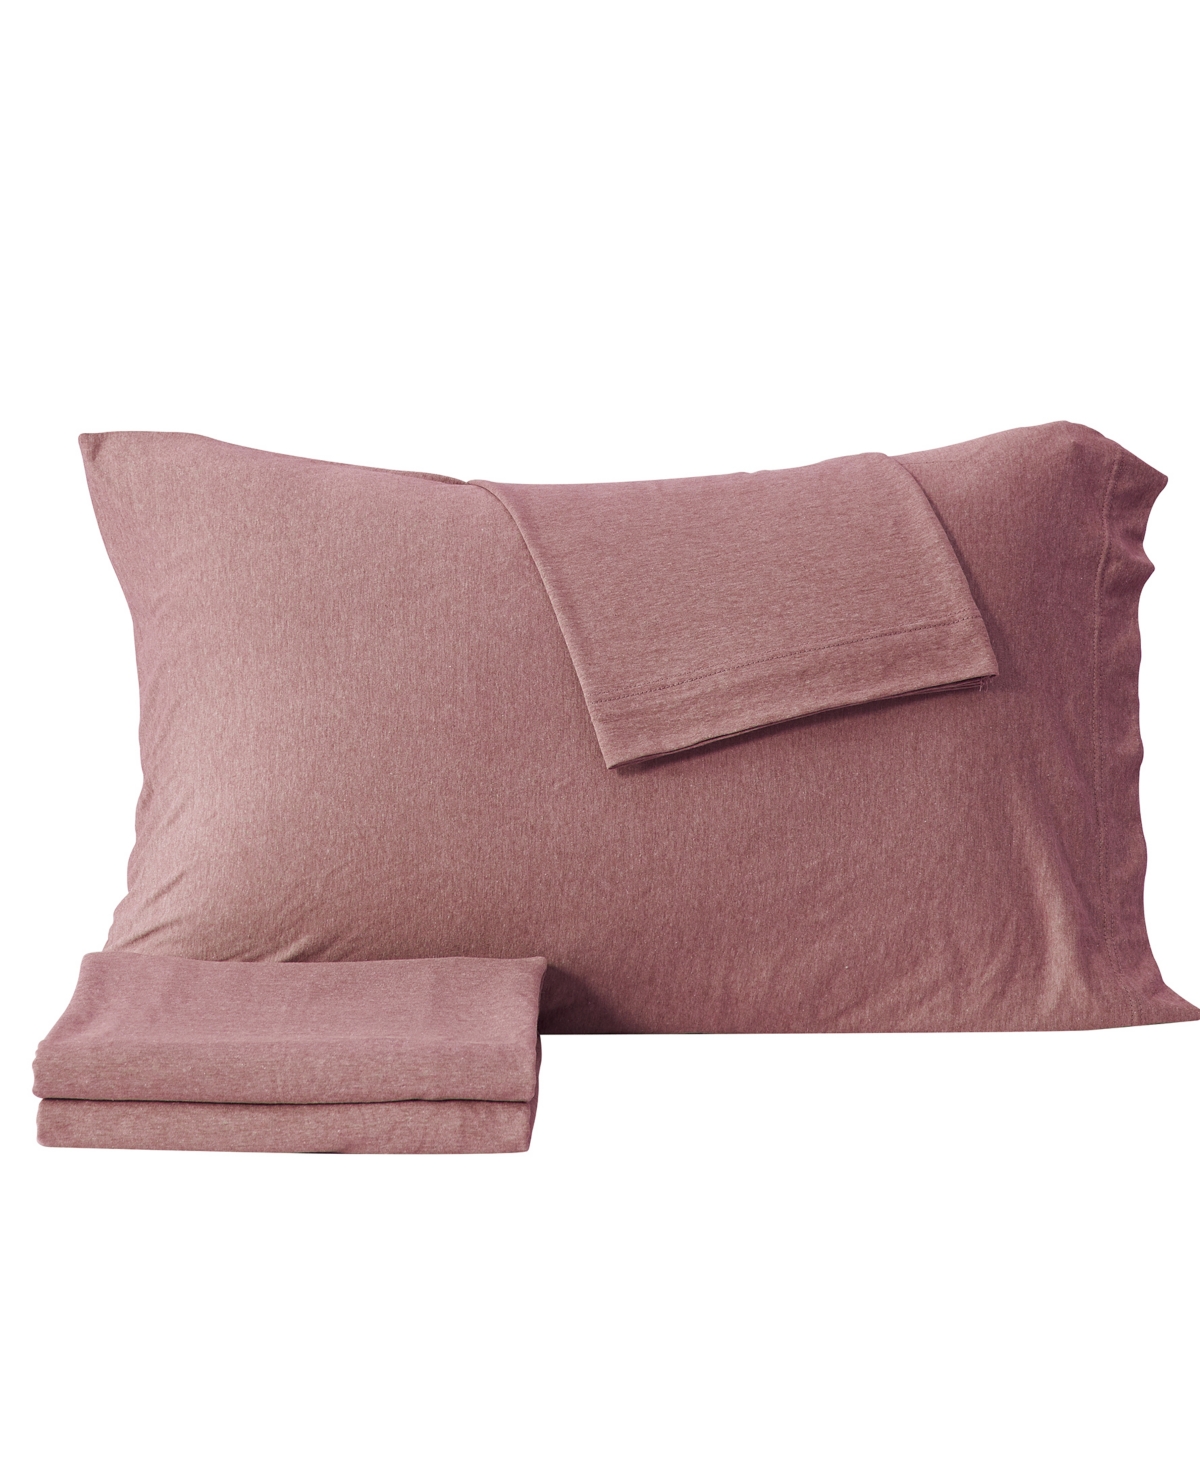 Premium Comforts Heathered Melange T-shirt Jersey Knit Cotton Blend 4 Piece Sheet Set, King In Heathered Dusty Rose